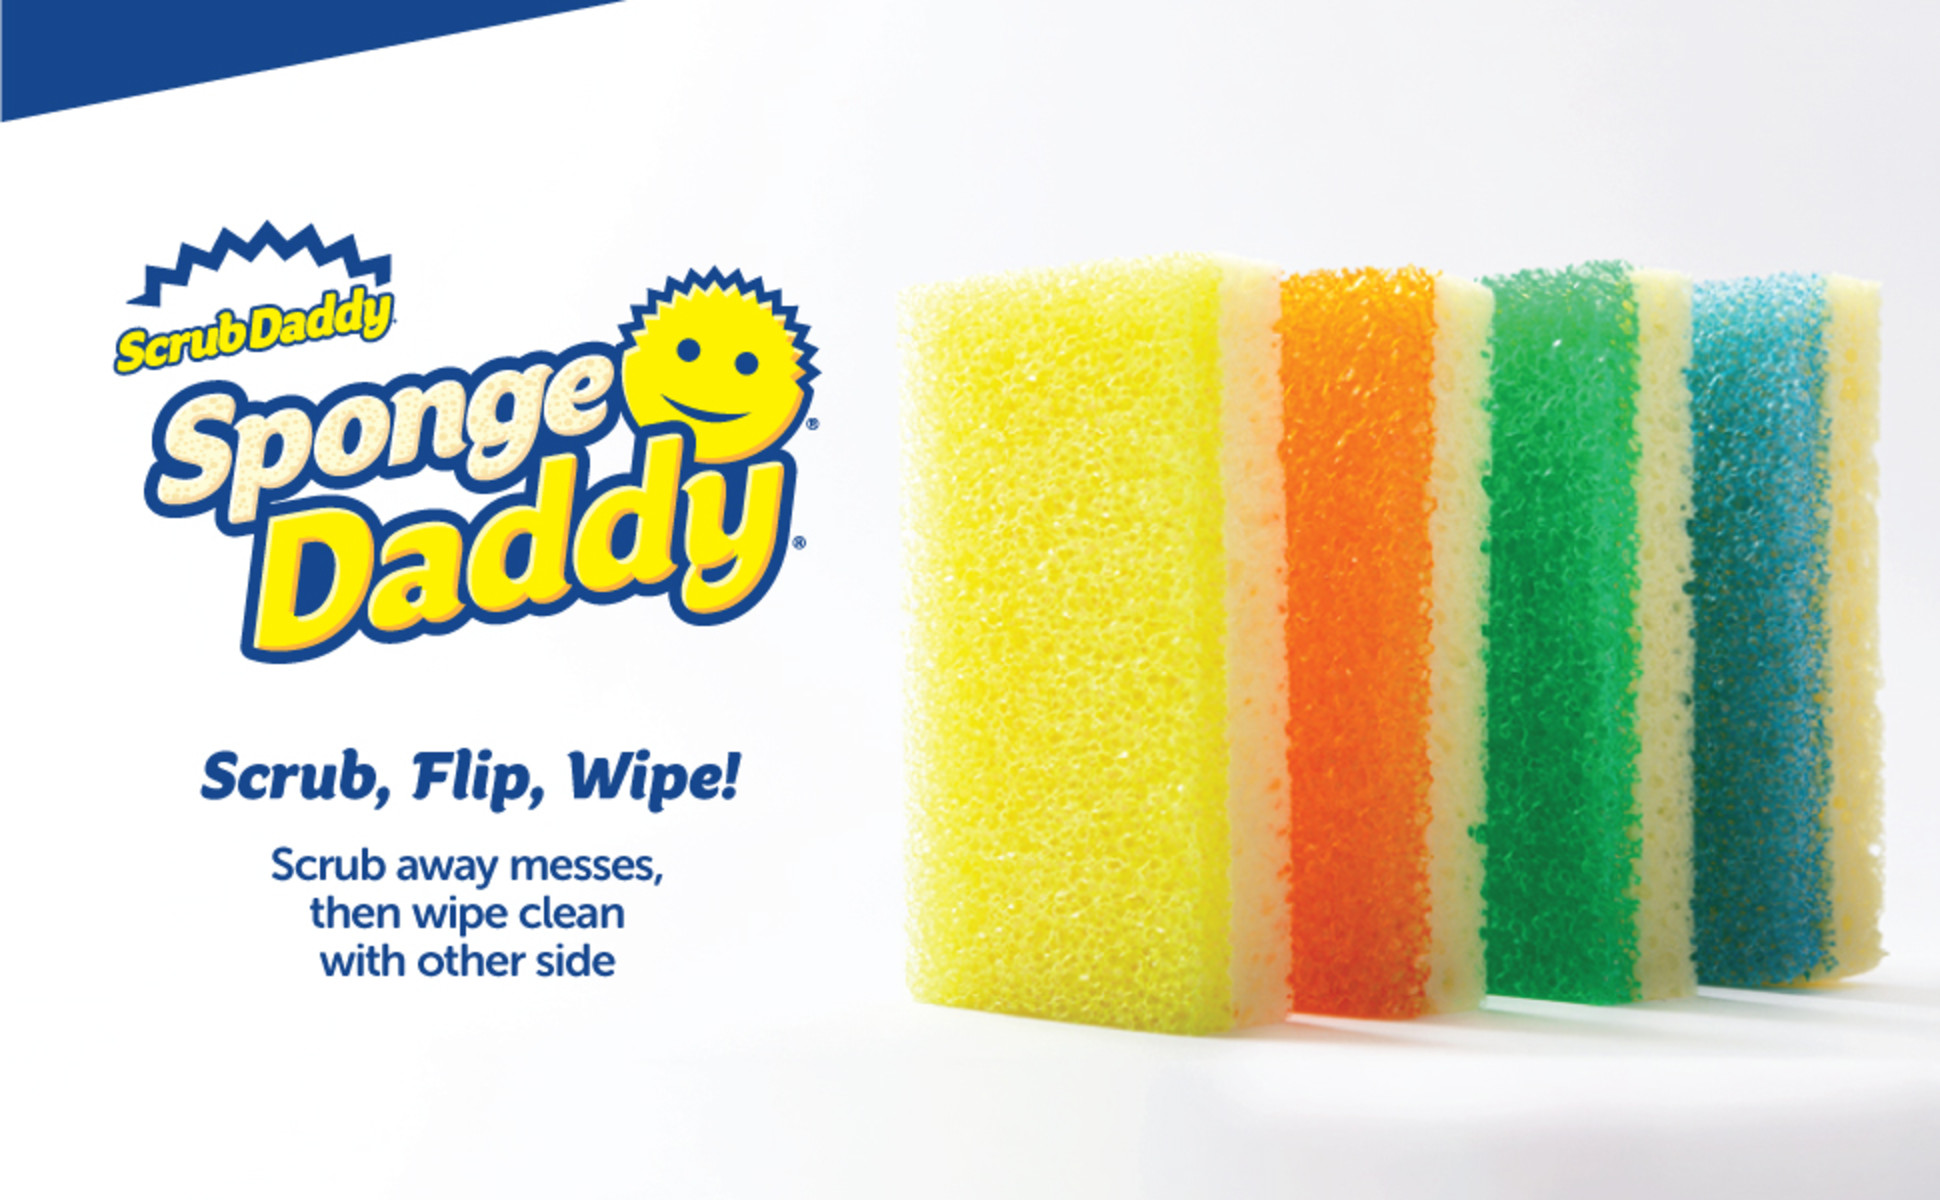 Sponge Daddy 4pk, Scrub Daddy